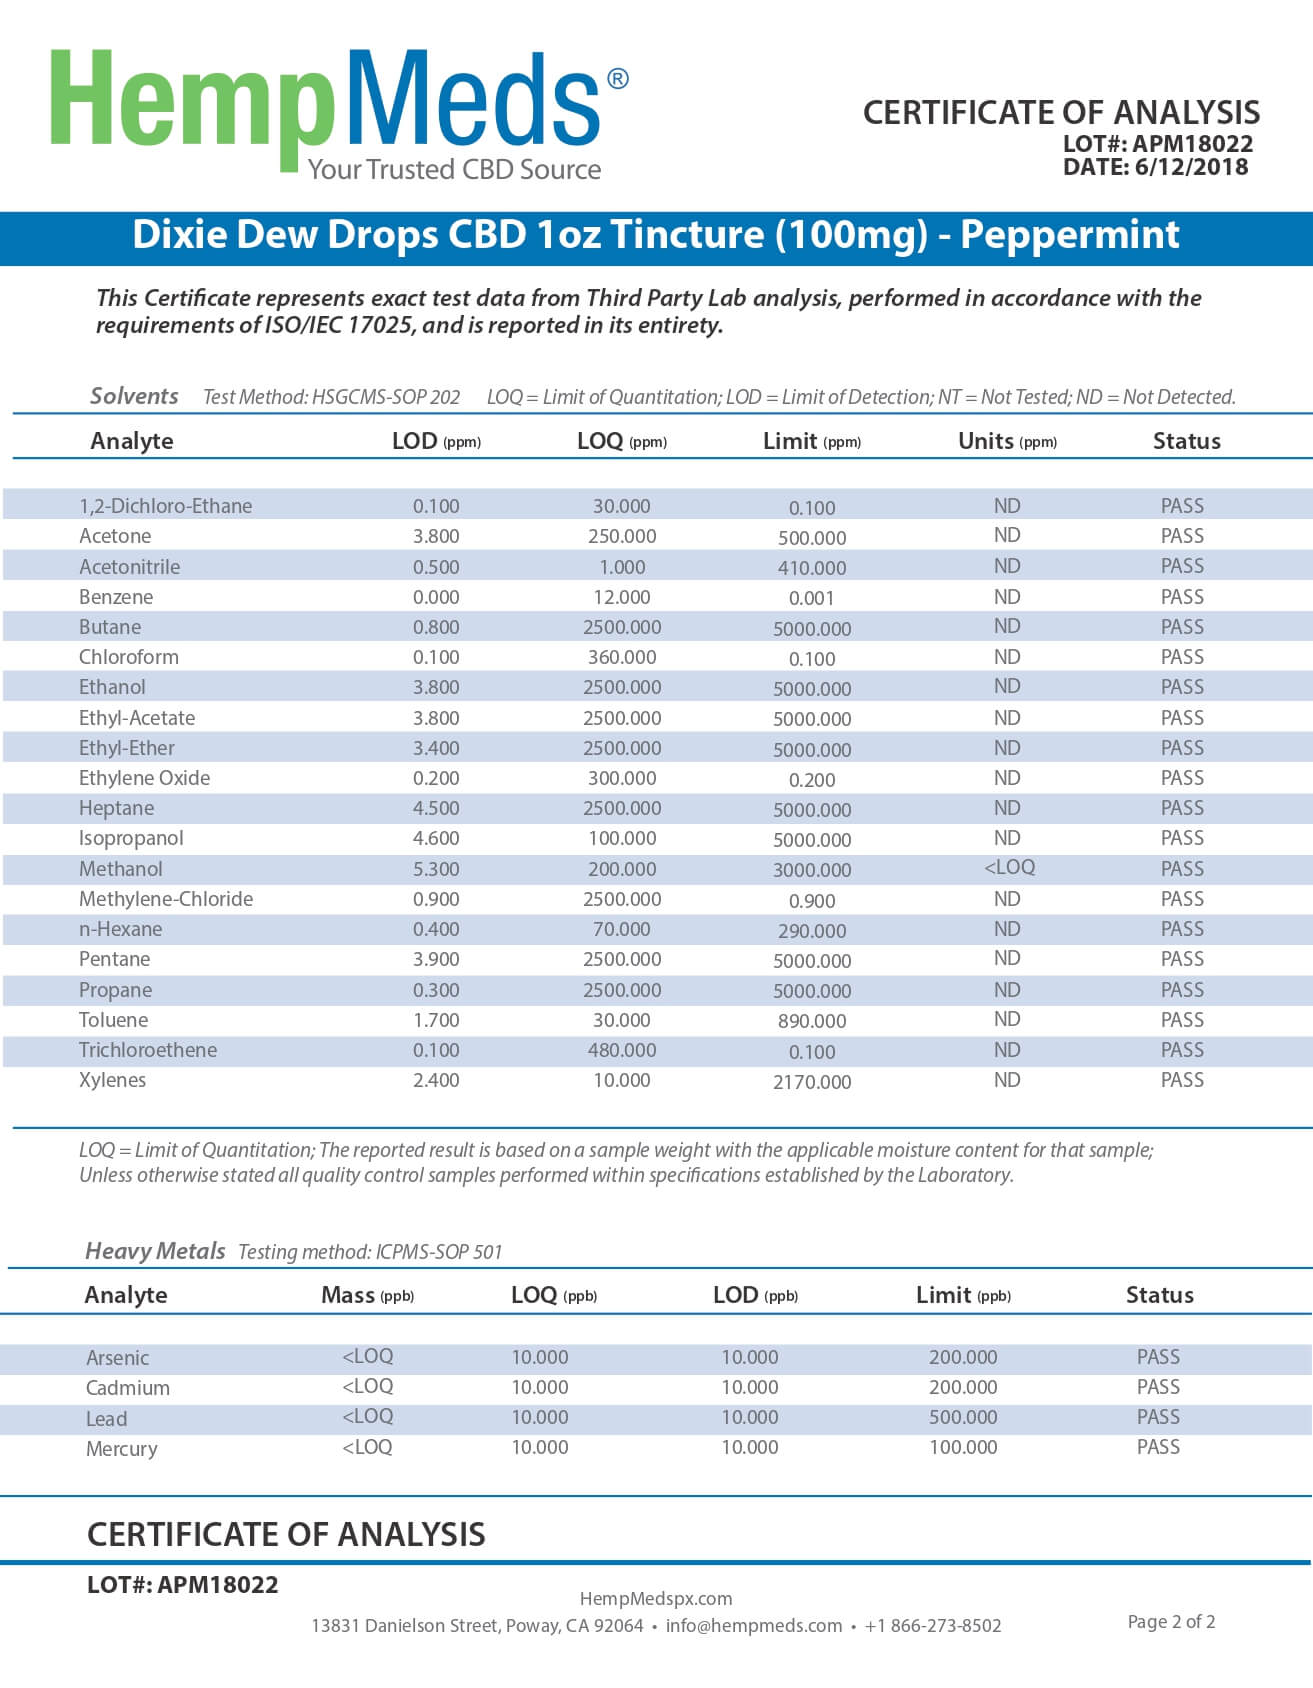 Dixie Botanicals CBD Tincture Peppermint 1oz Dew Drops 100mg Lab Report